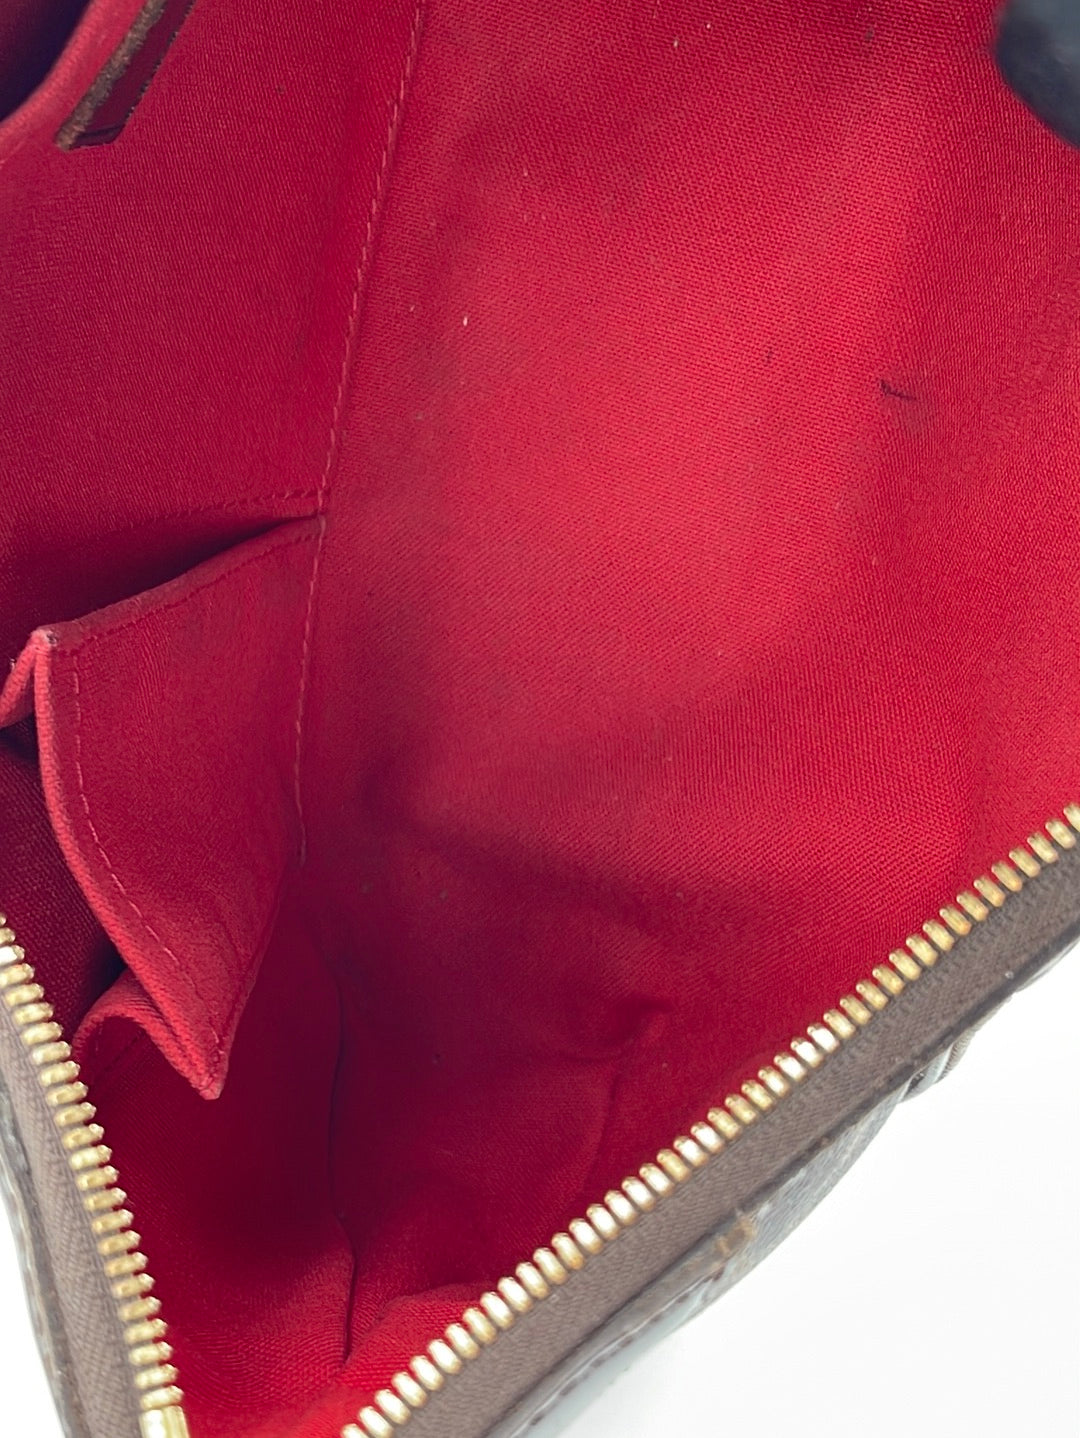 Louis Vuitton Thames Damier PM Shoulder Bag – Uptown Cheapskate Torrance